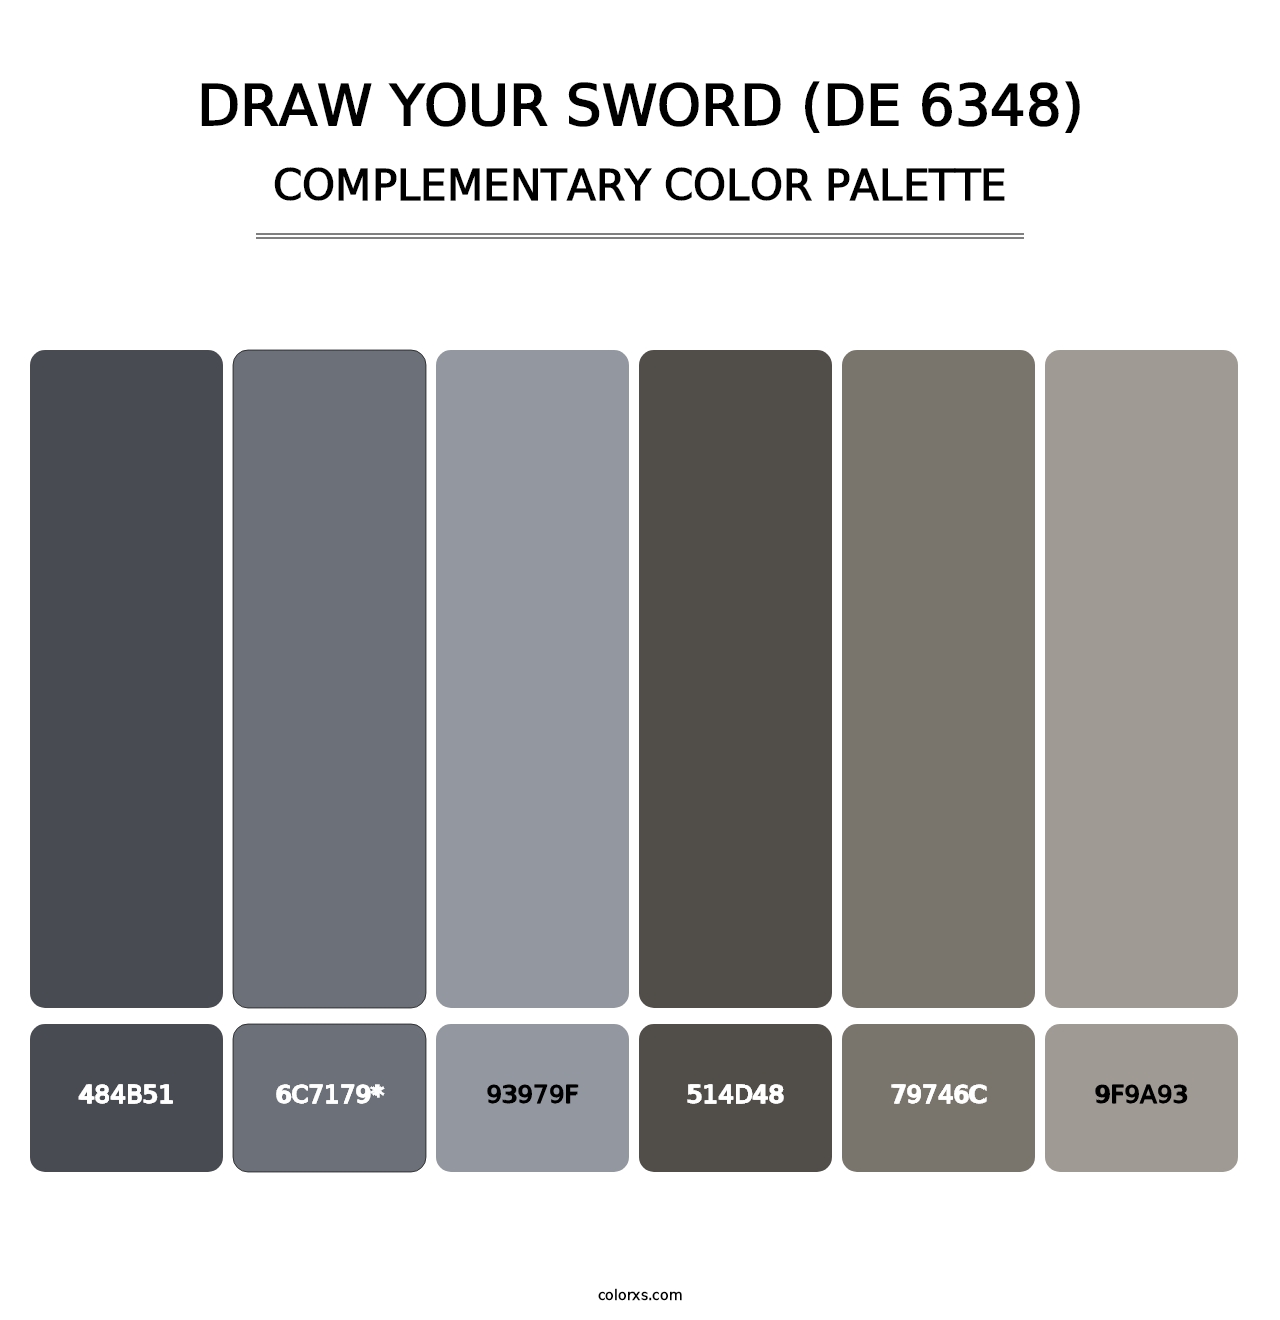 Draw Your Sword (DE 6348) - Complementary Color Palette